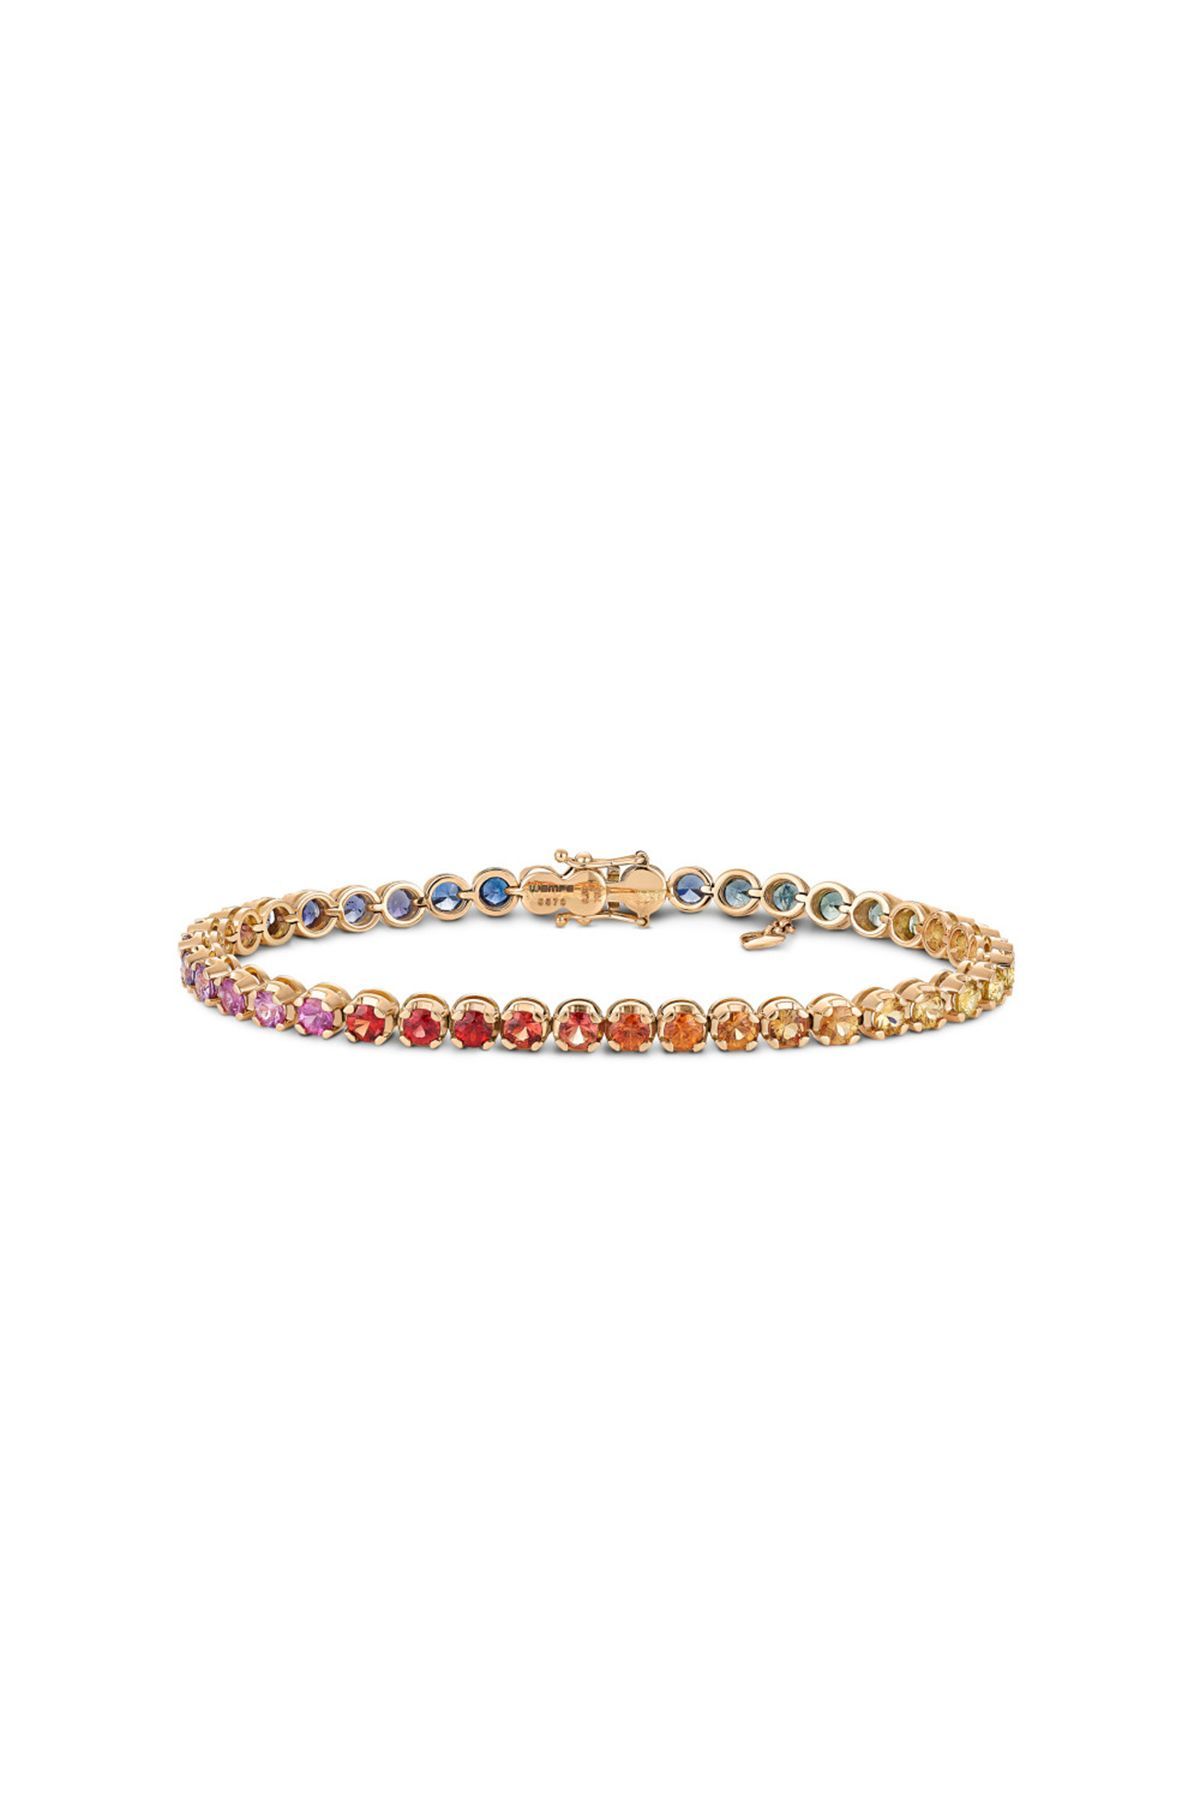 WeBuyNow Classic Luxury Brands Bracelet for Women Bracelets & Bangles Love Crystal Bracelet Jewelry for Women 